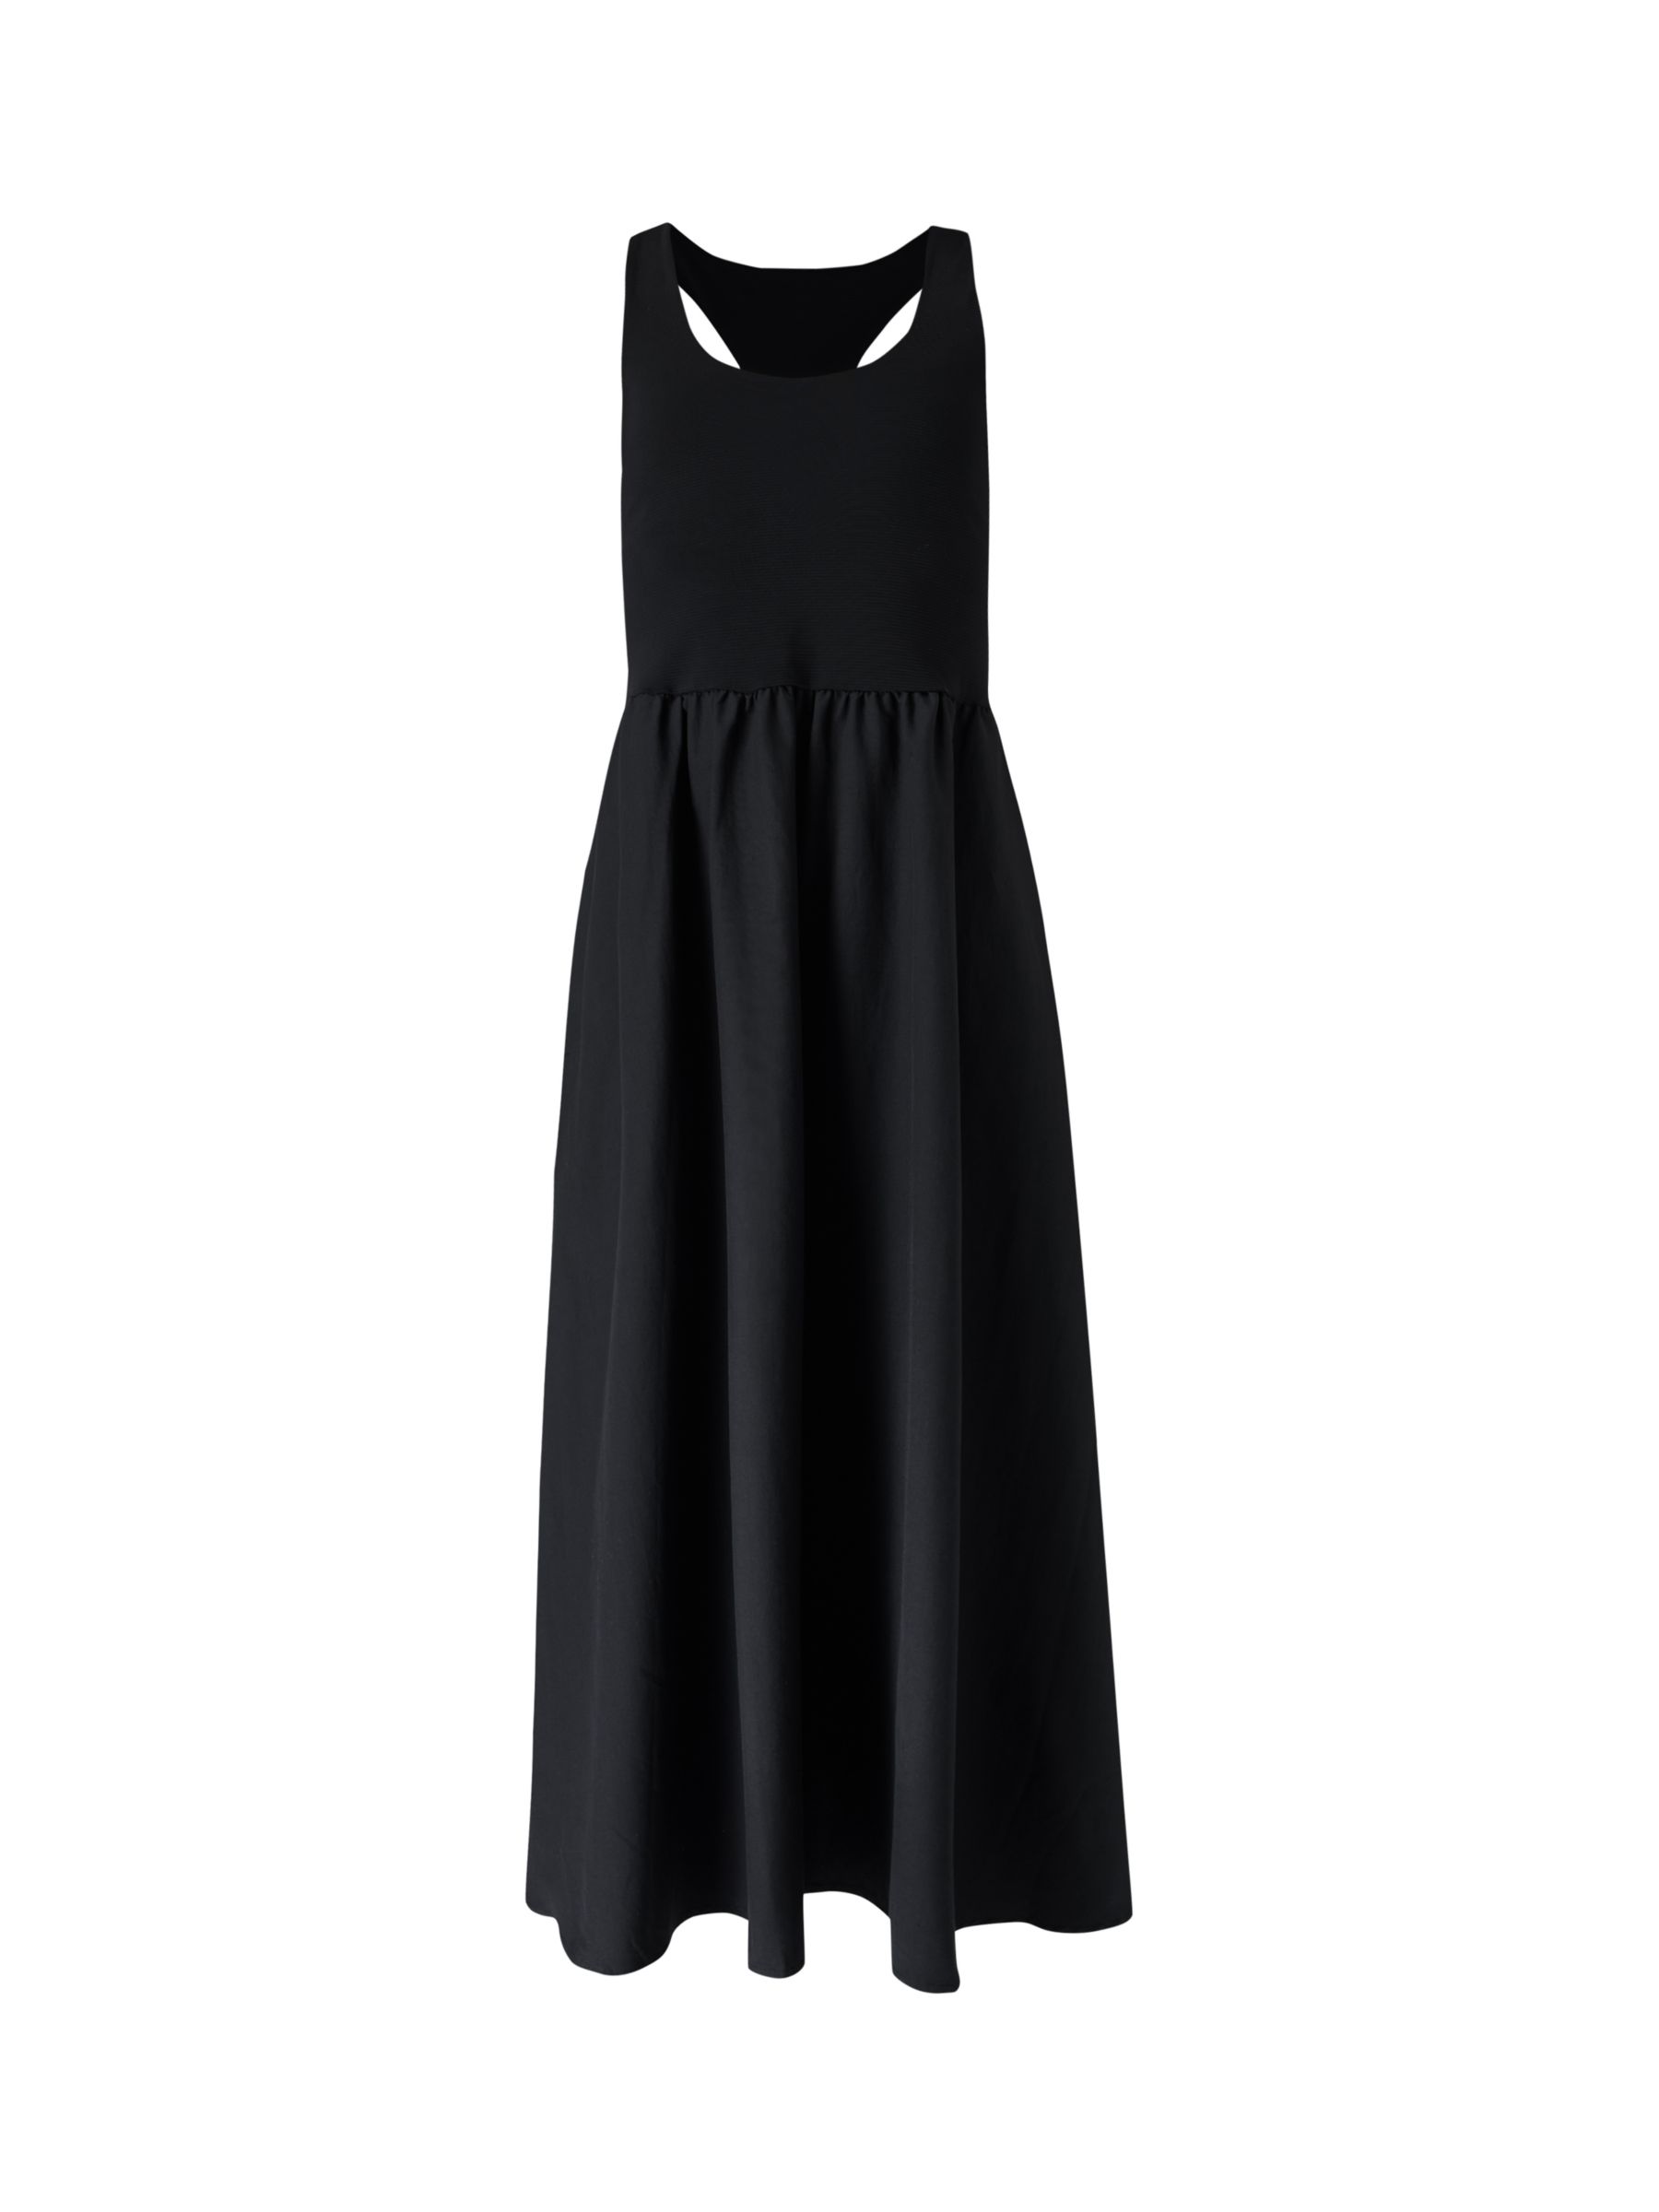 Sweaty Betty Explorer Midi Dress, Black at John Lewis & Partners